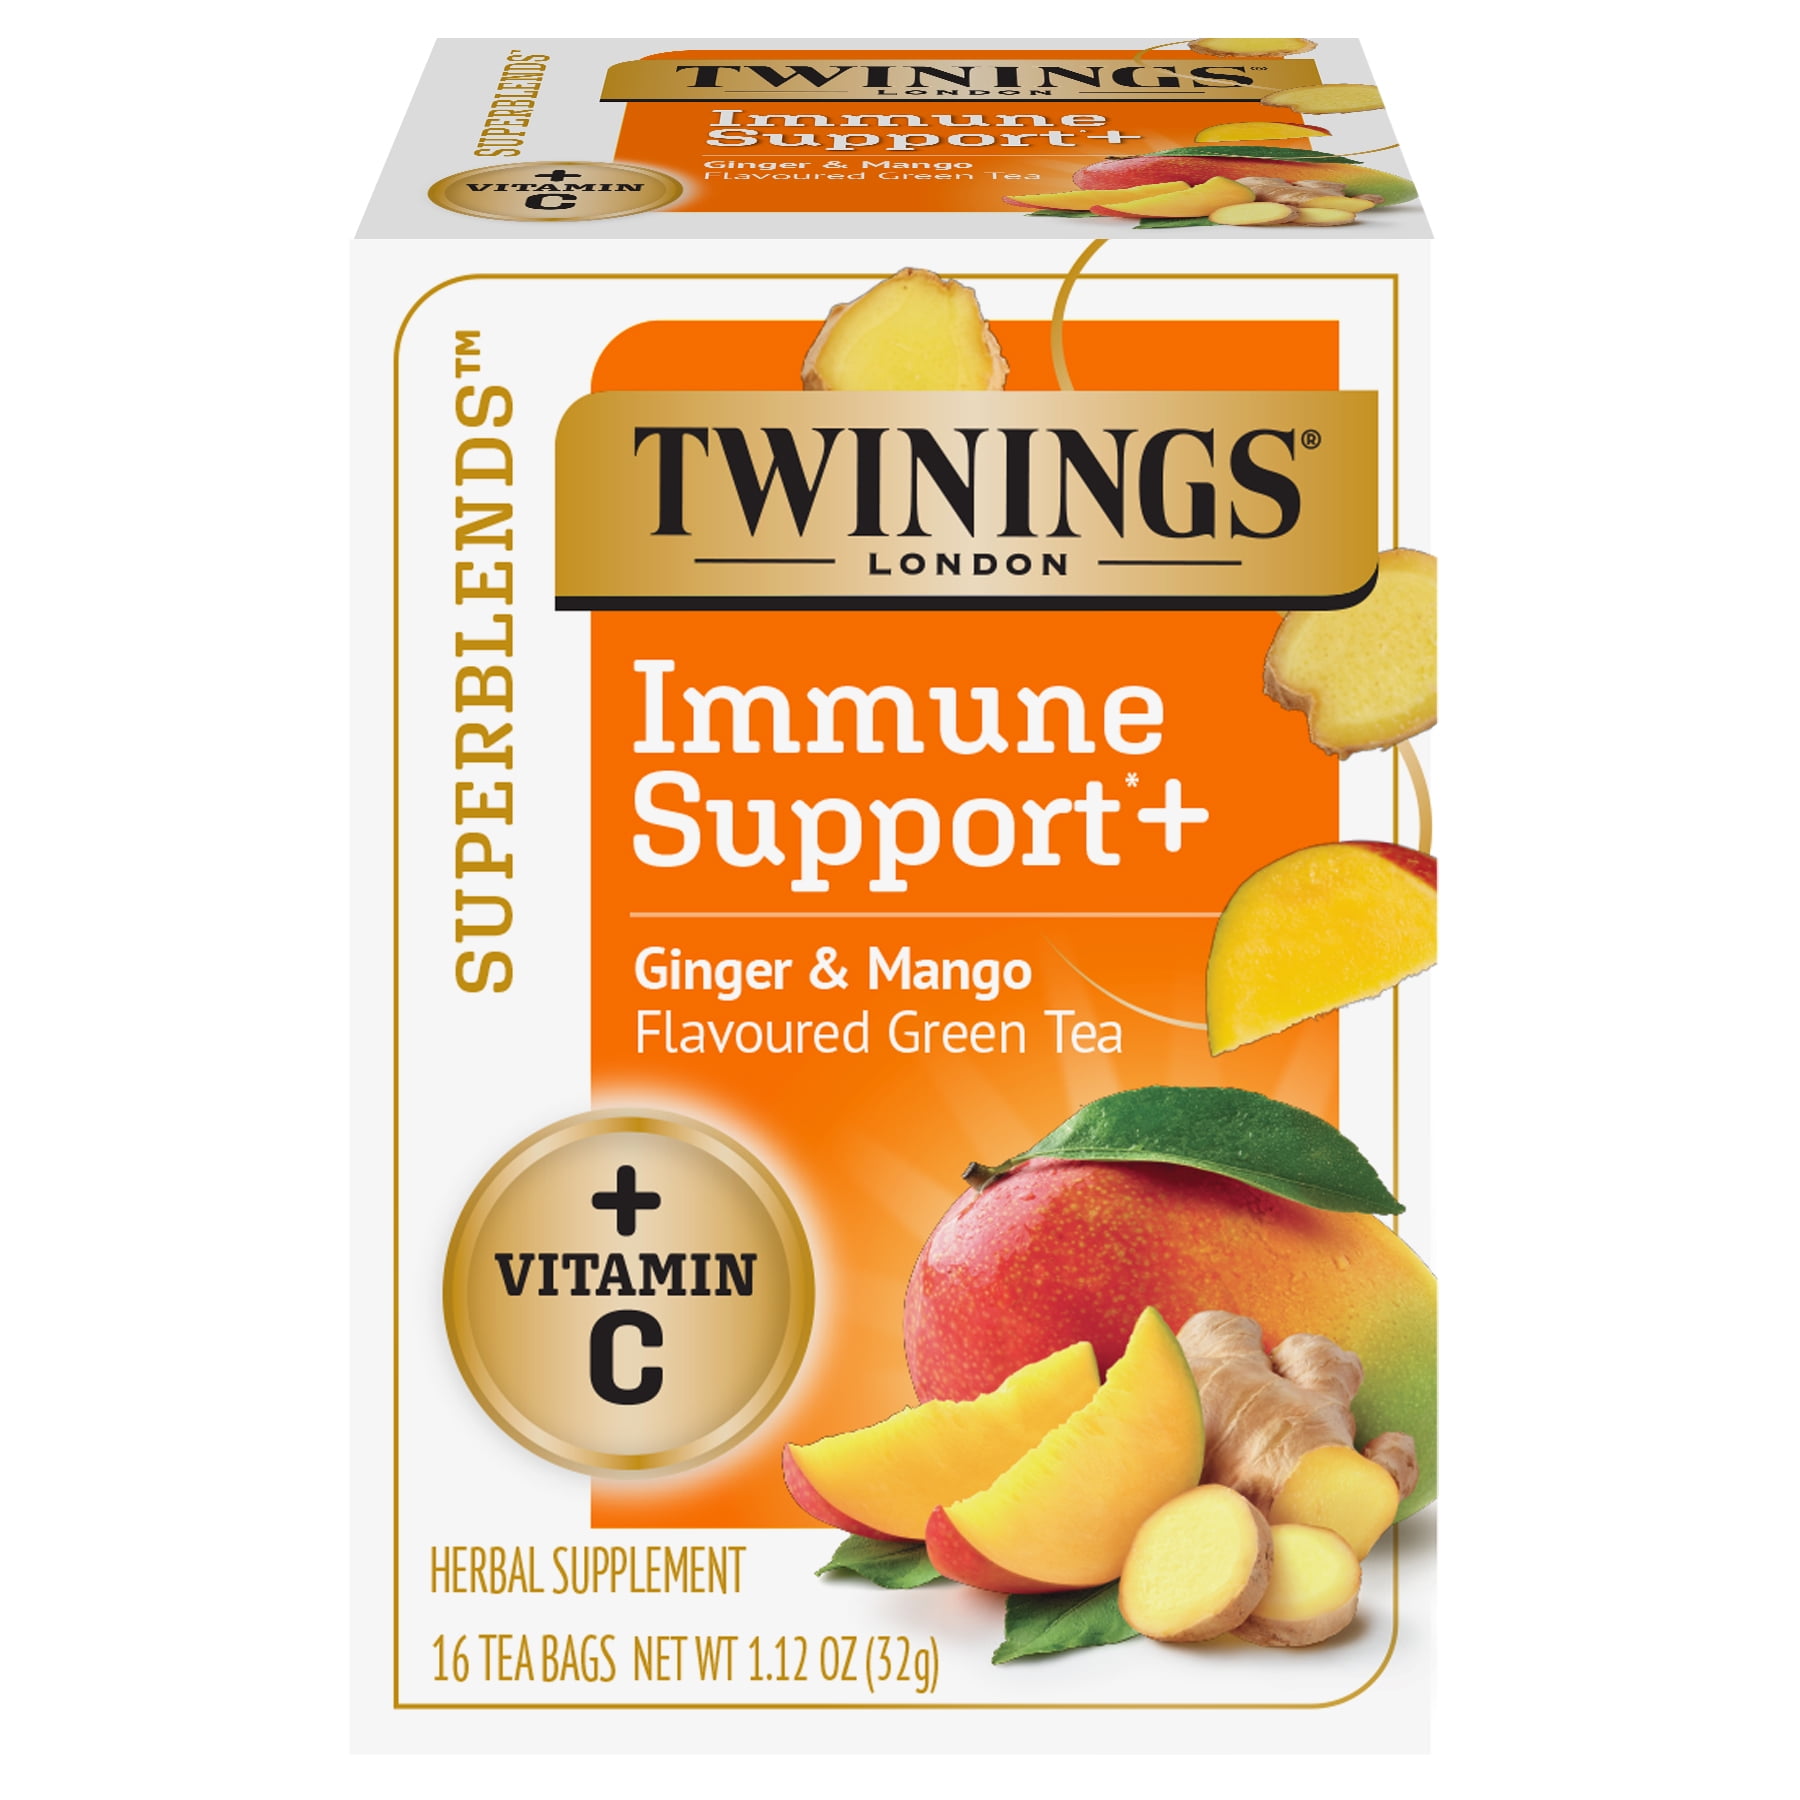 Twinings Superblends Immune Support+ Ginger & Mango Flavoured Green Tea + Vitamin C , 16 Tea Bags